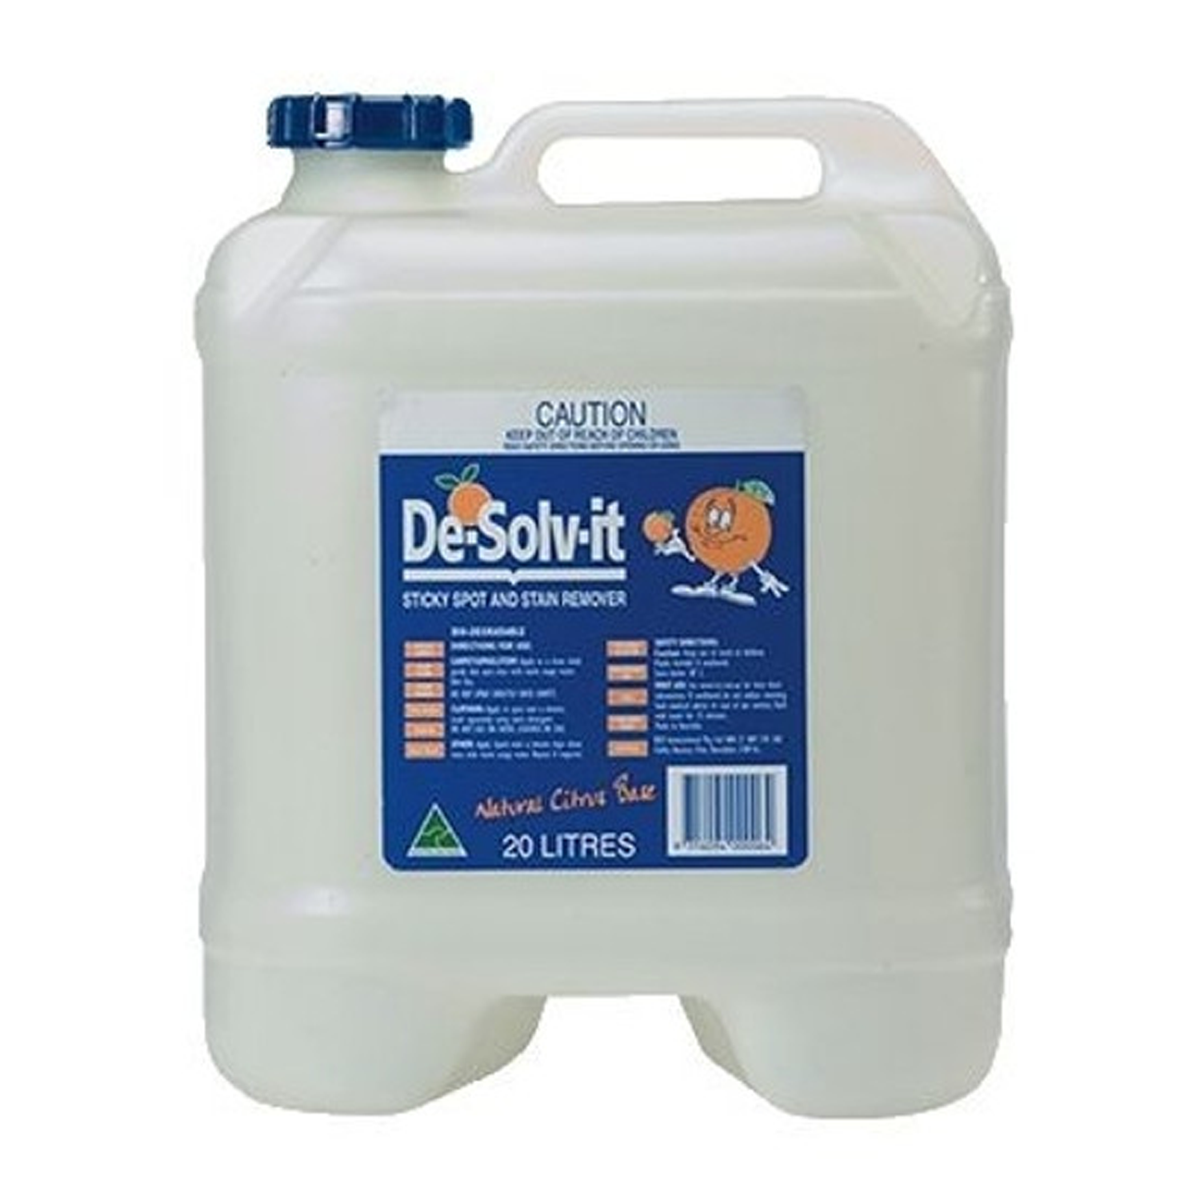 De-Solv-it Multi-Purpose Cleaner, Sticky Spot & Stain Remover Natural Citrus Base by De-Solv-It